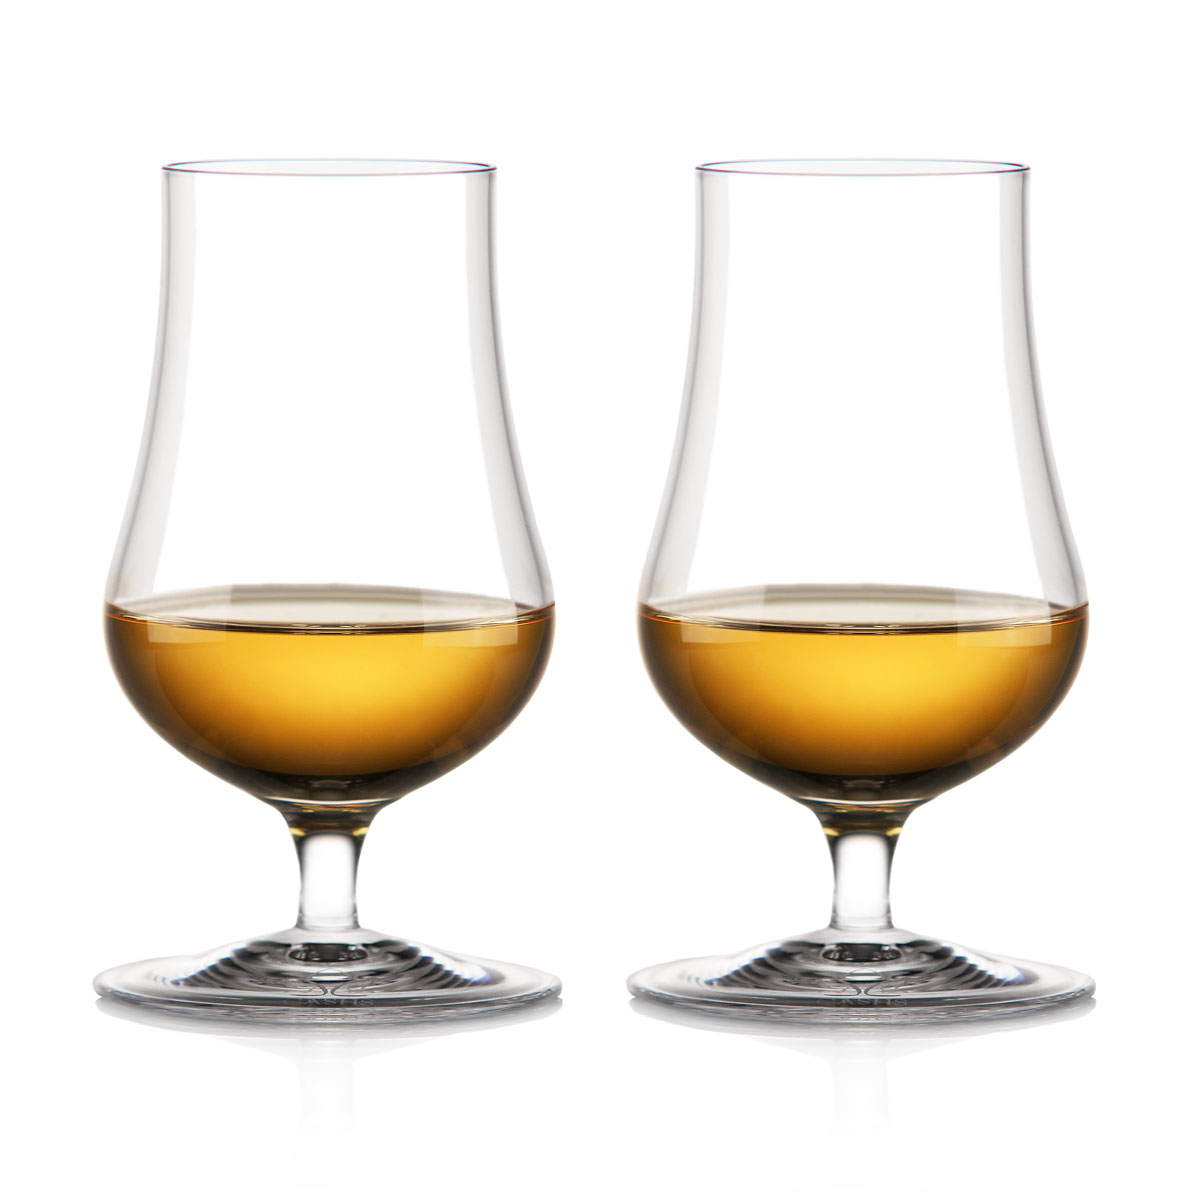 Cashs Ireland Grand Cru Single Malt Whiskey Tasting Glass, Pair